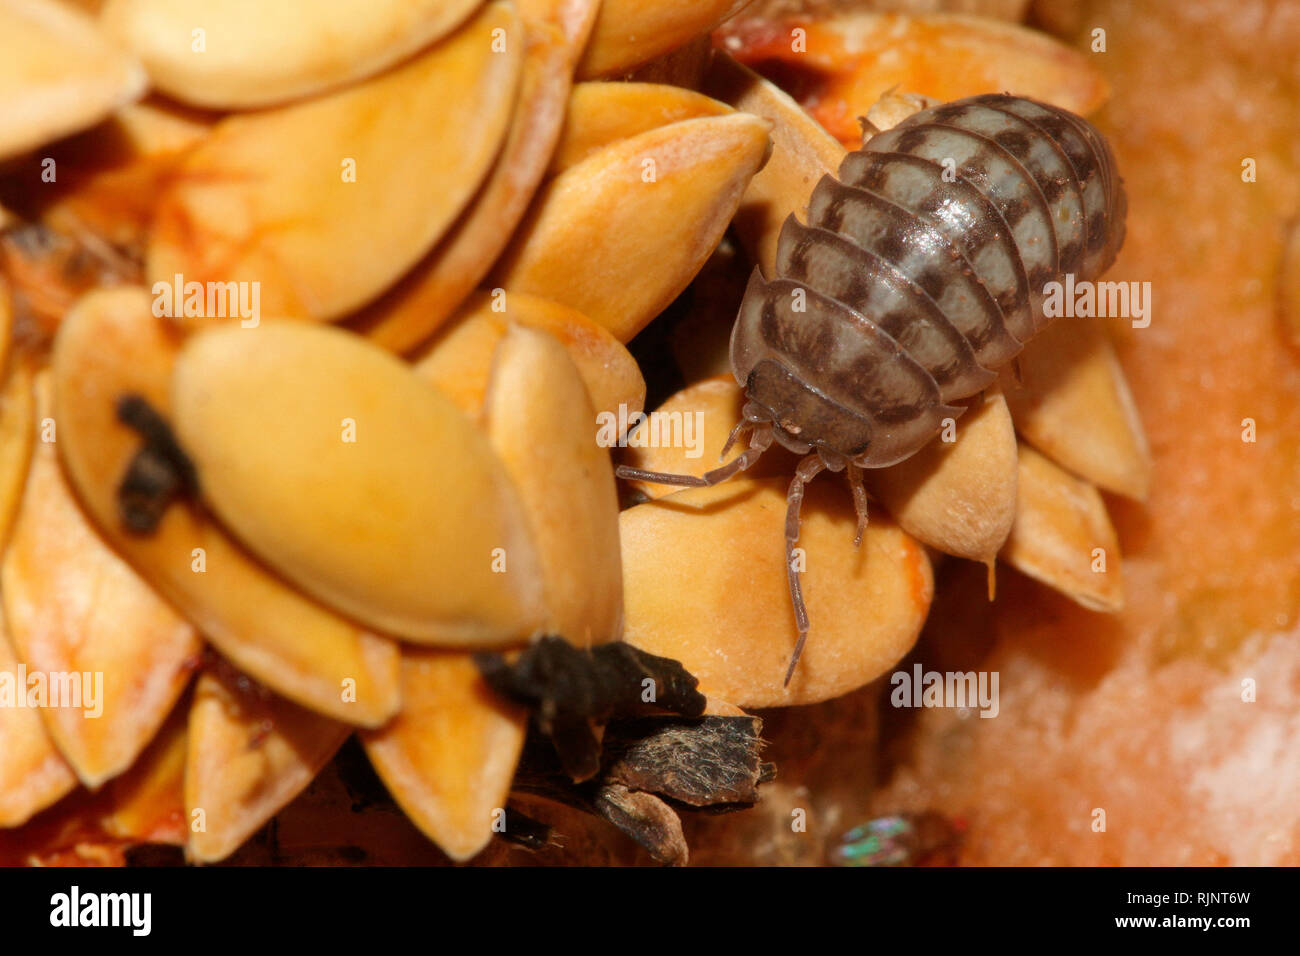 Common Pill Woodlouse (Armadillidium vulgare) on food detritus from the compost bin Stock Photo